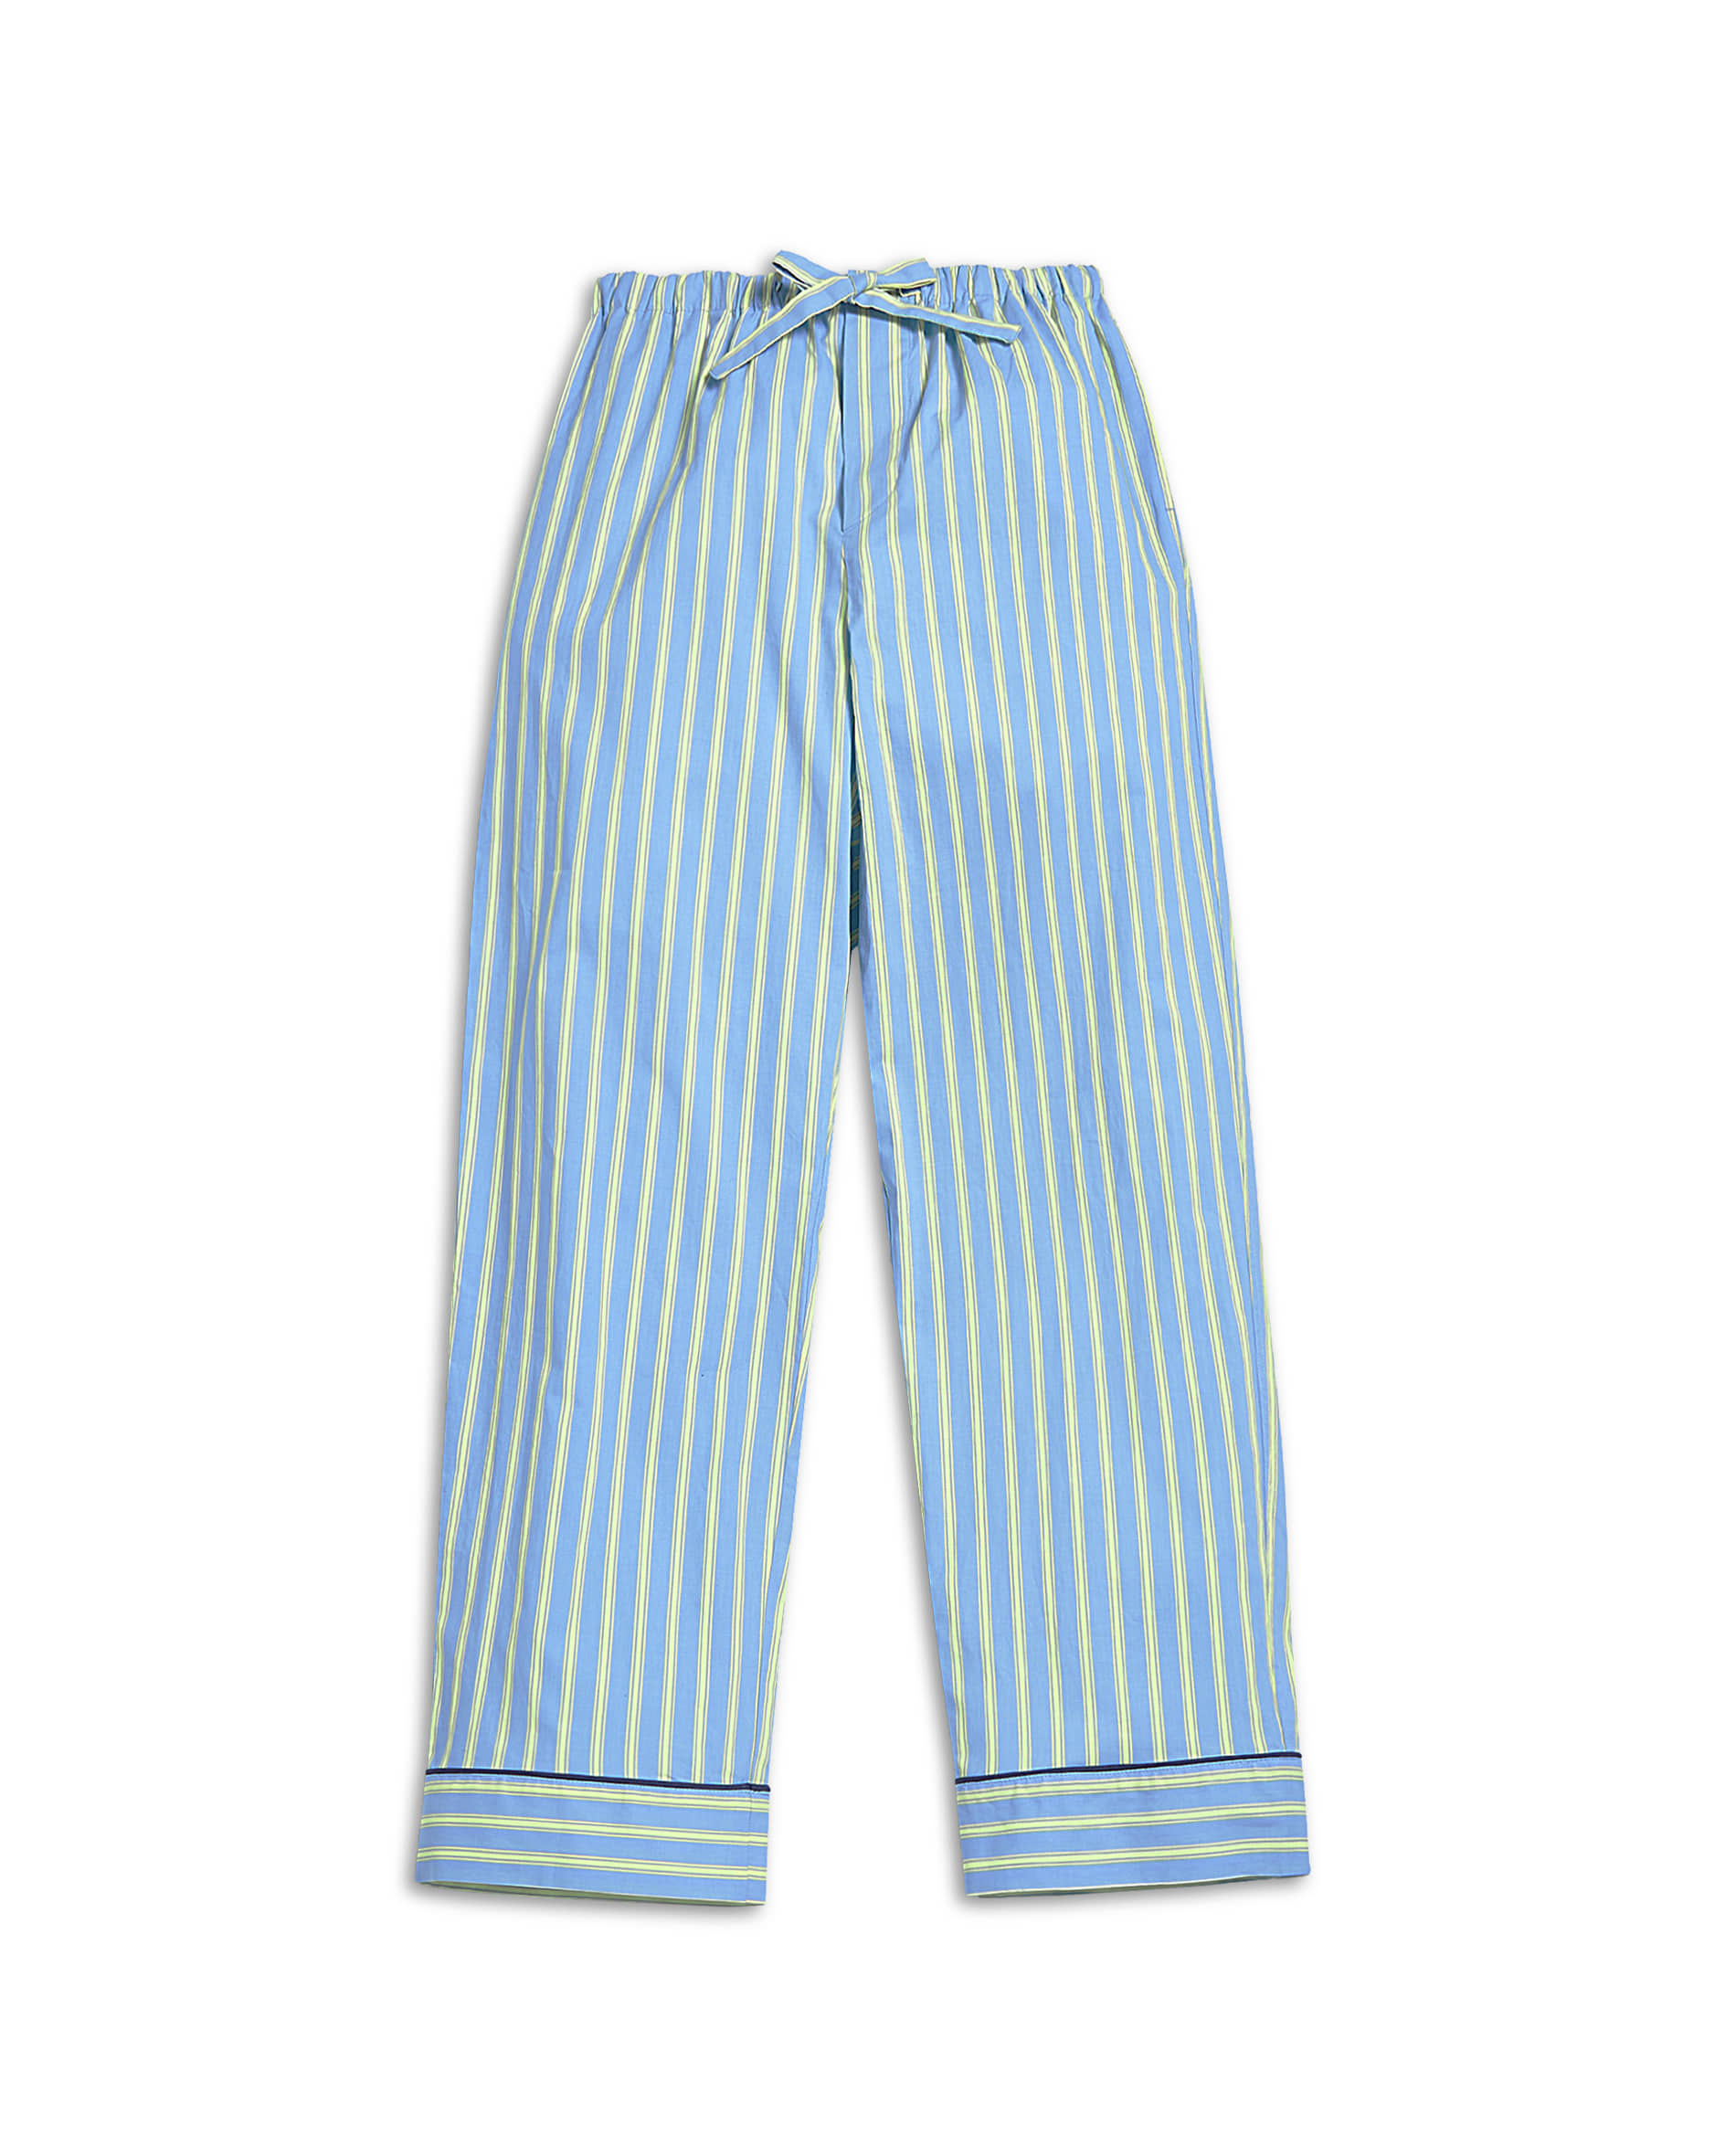 Chilling Stripe Pajama Set (Blue)